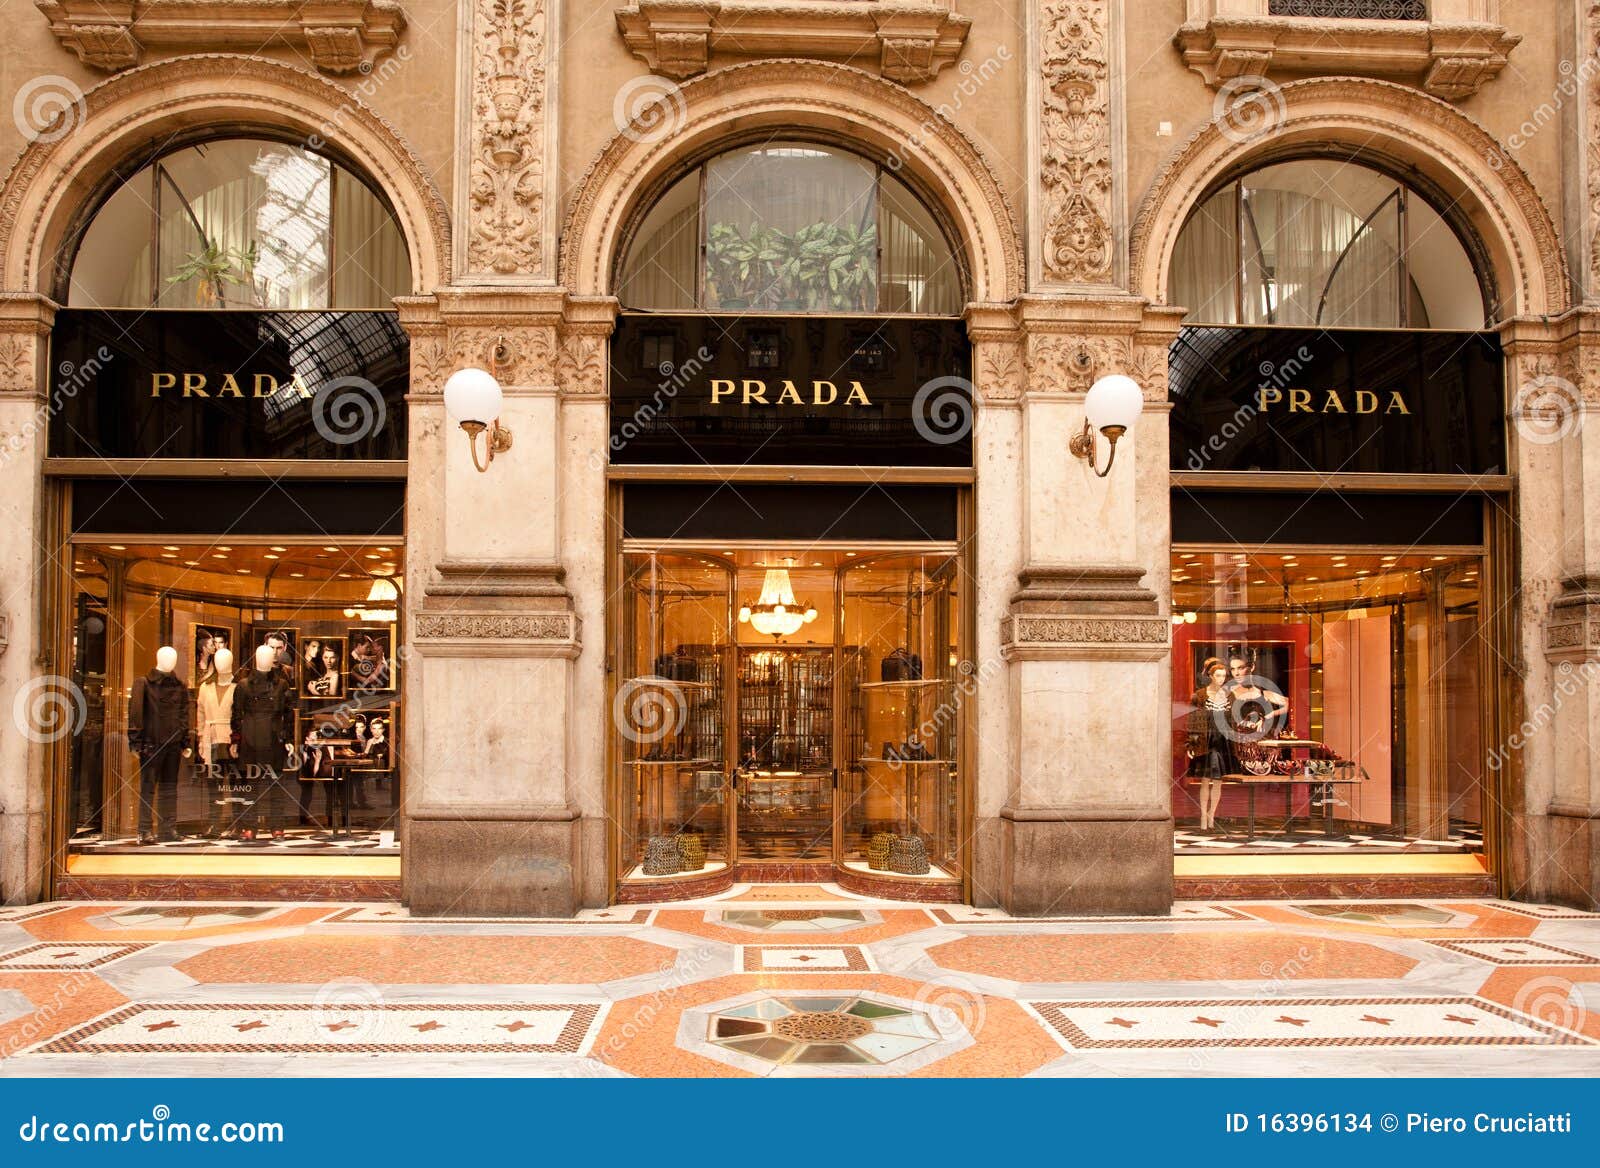 MADE IN ITALY: Prada Boutique In Milan Editorial Stock